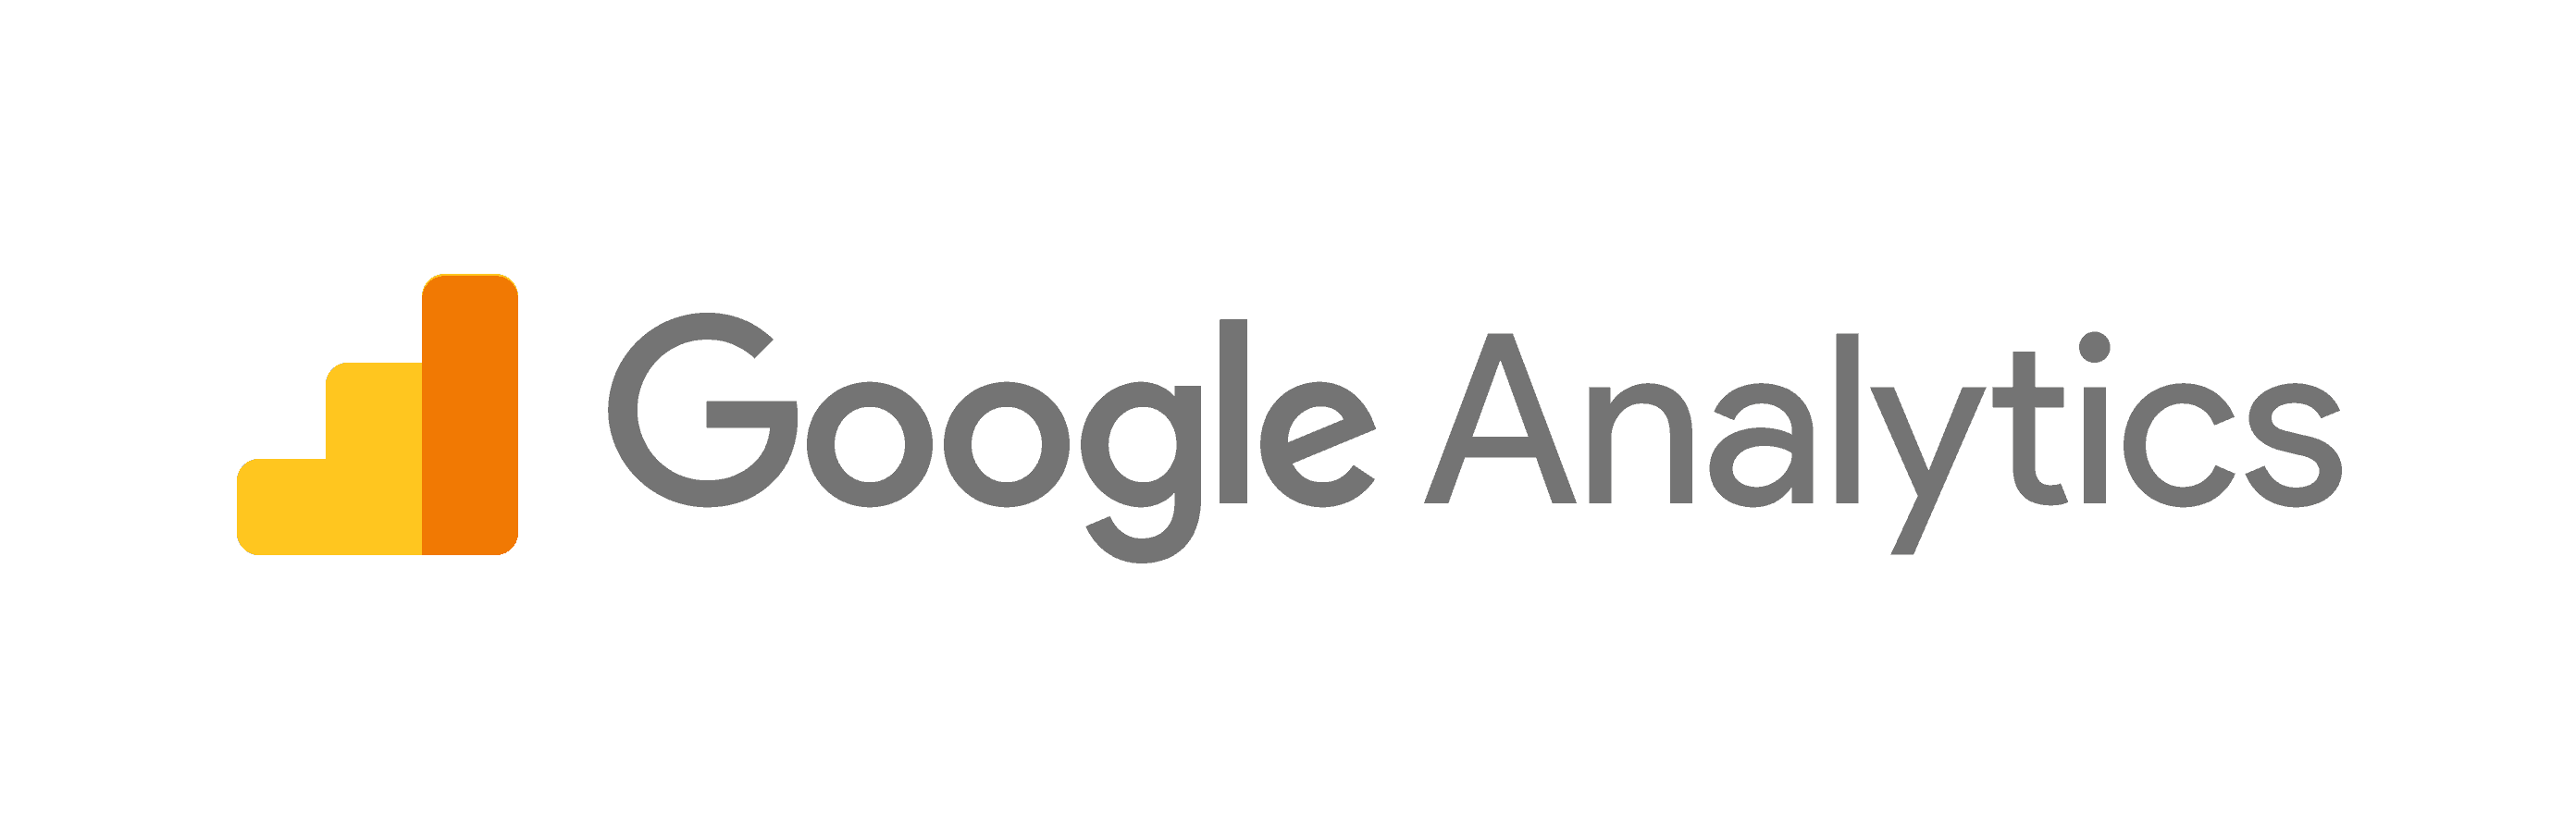 Google Analytics e o Monitoramento Web